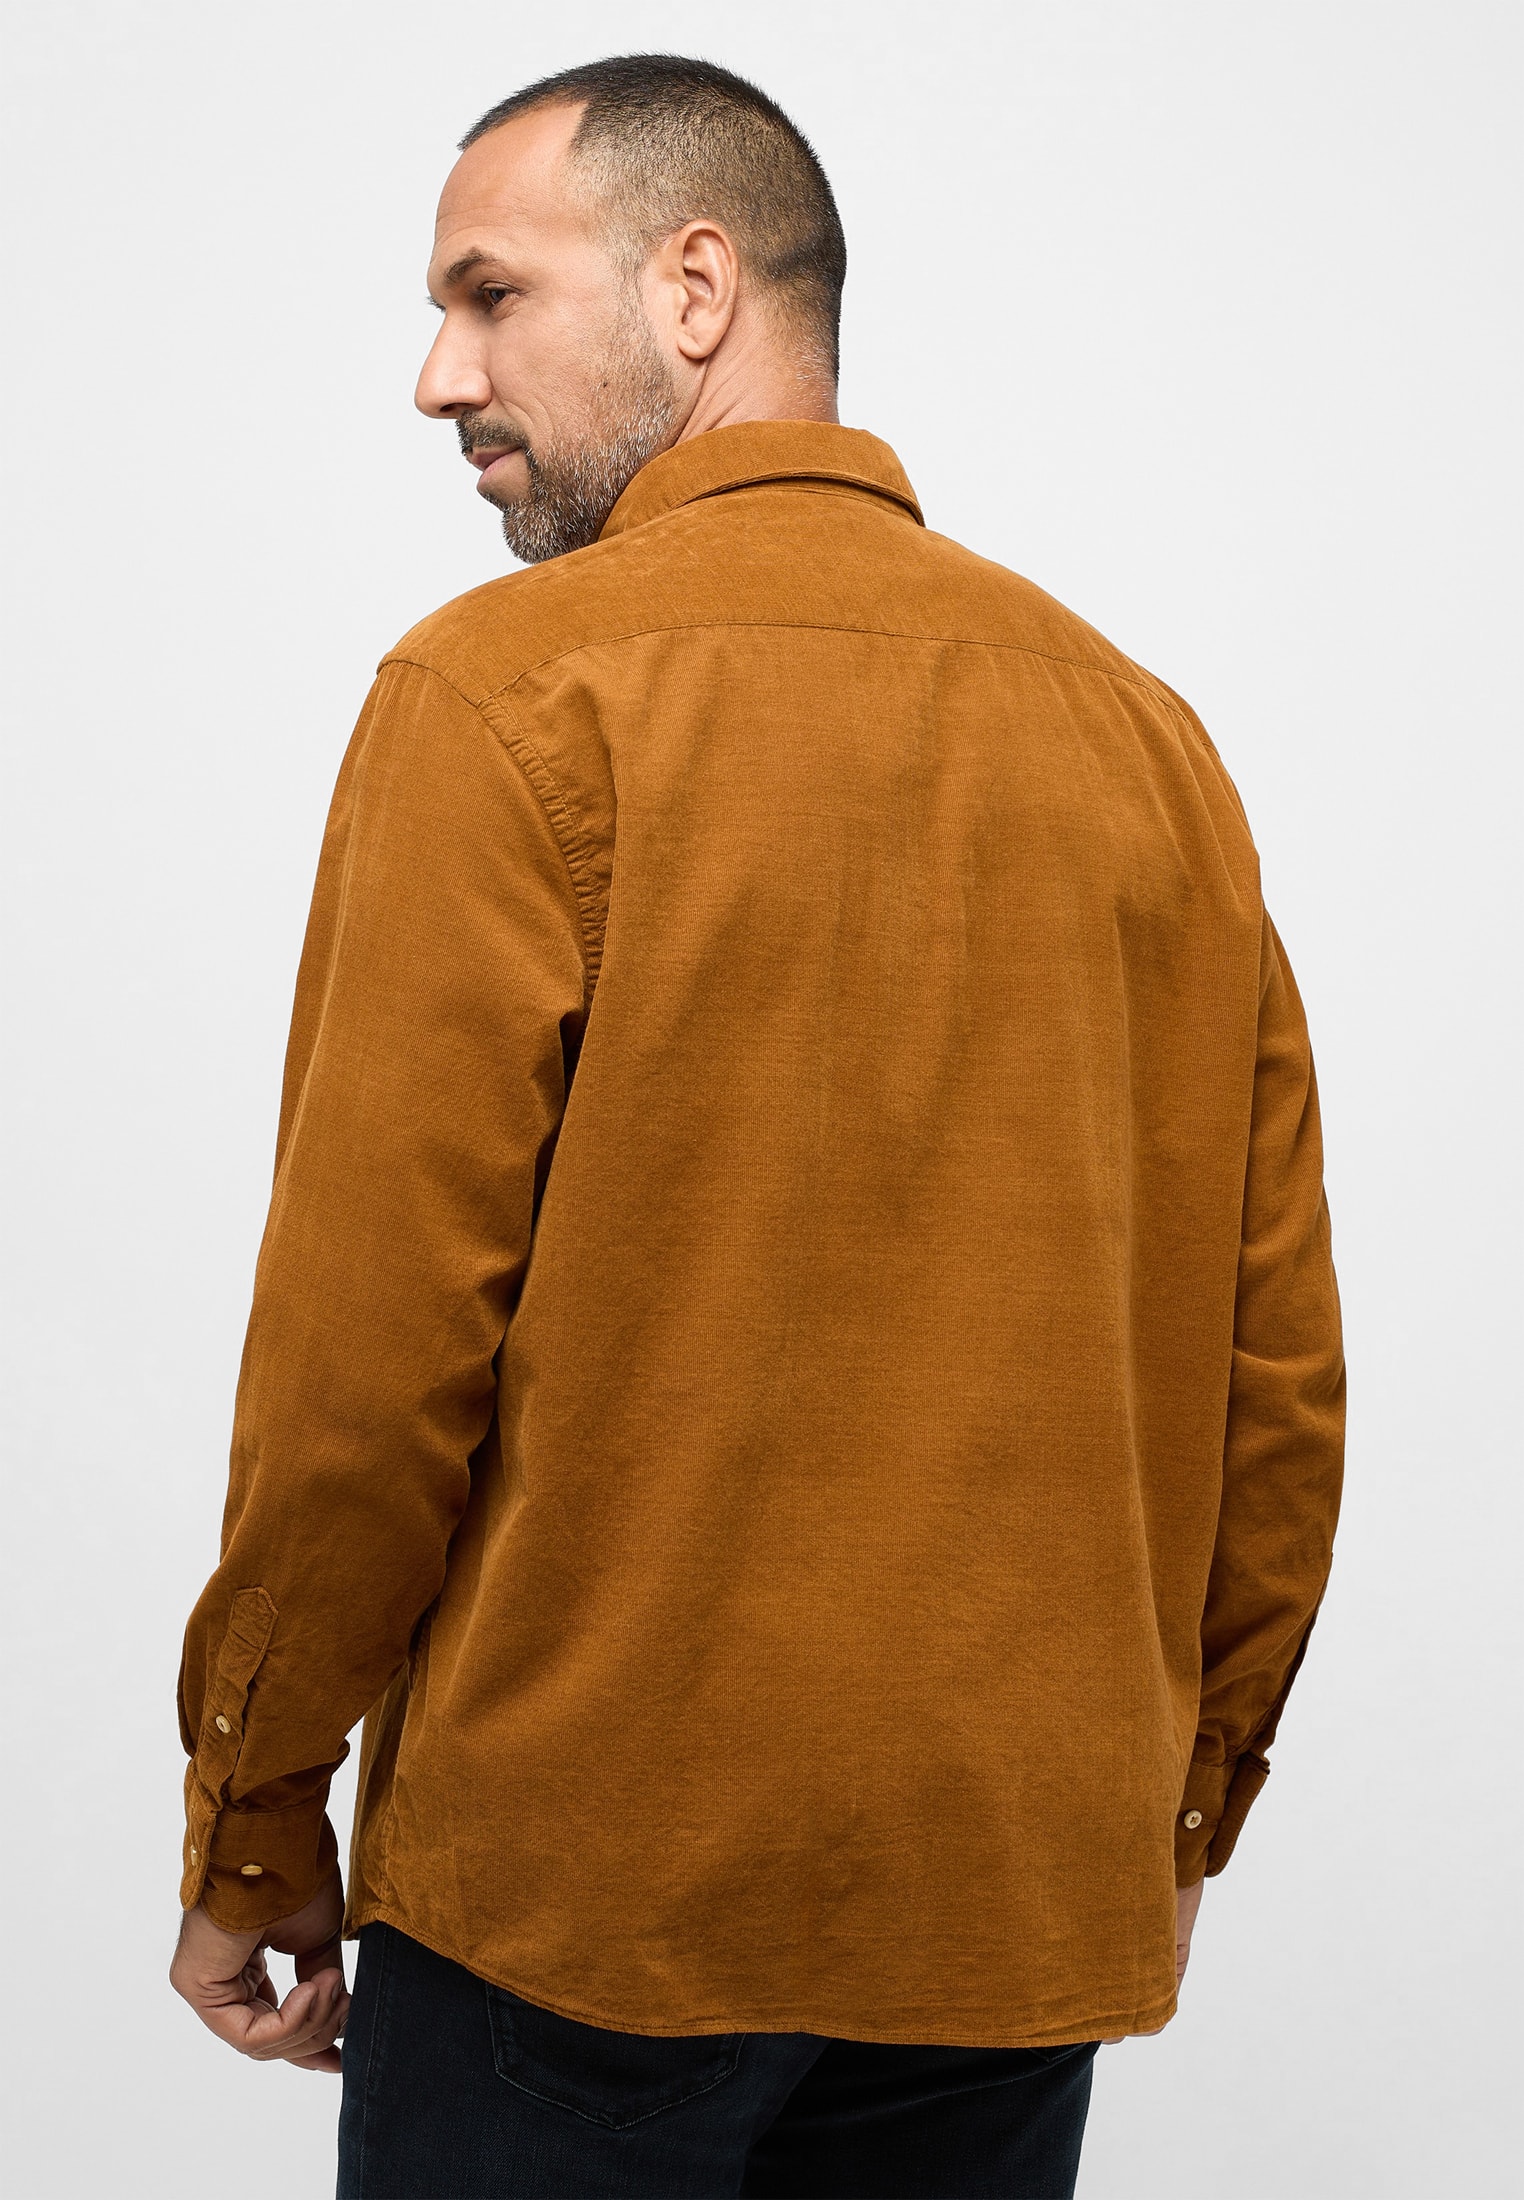 COMFORT FIT Shirt in camel plain | camel | 46 | long sleeve |  1SH12711-02-72-46-1/1